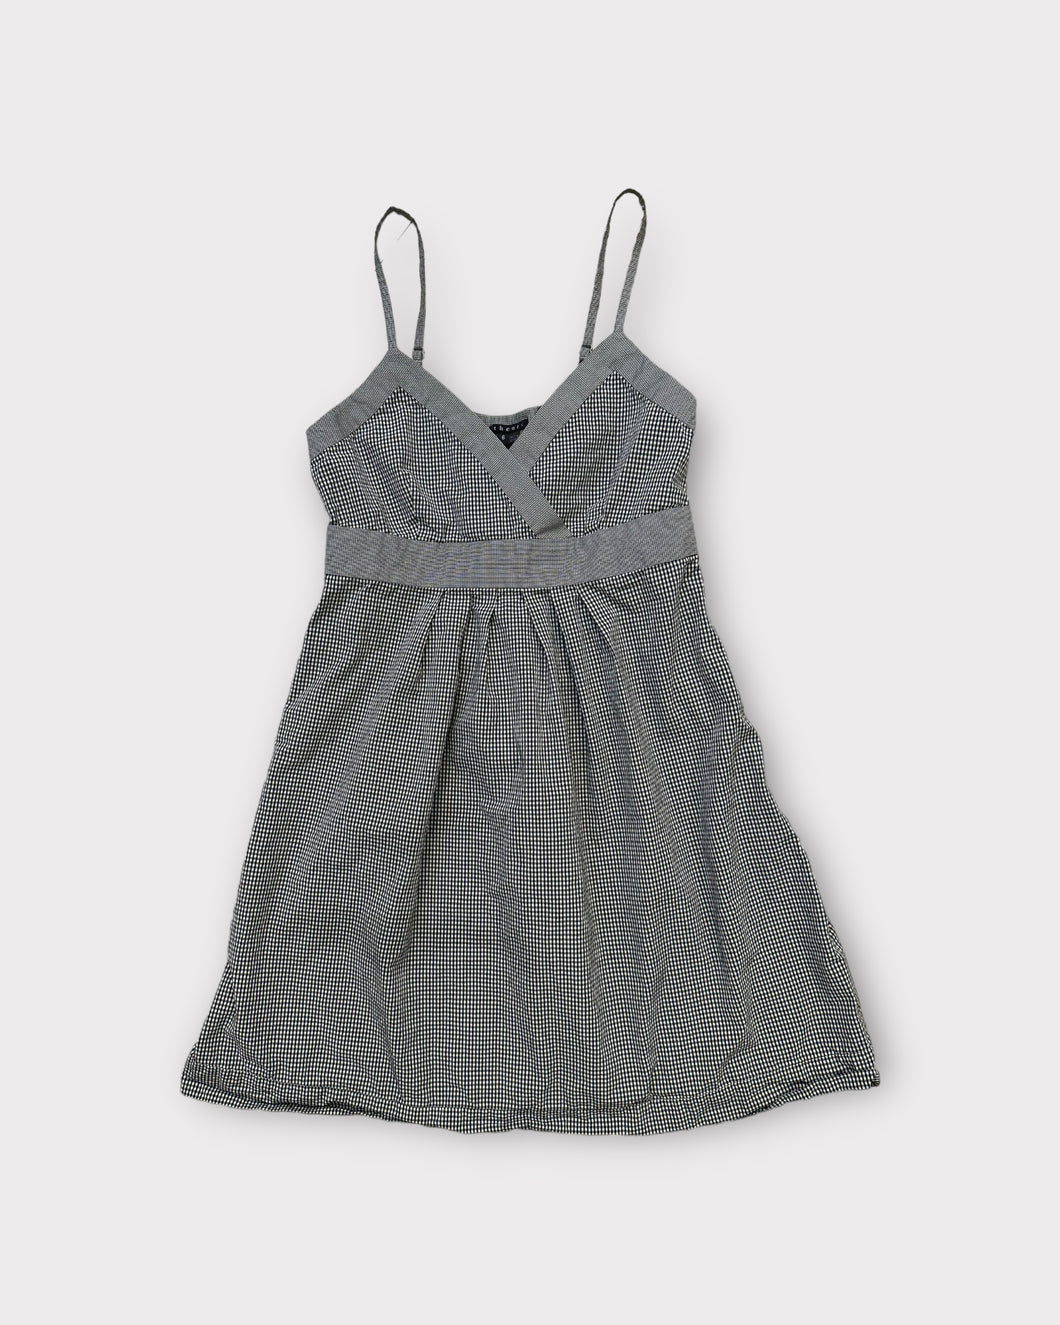 Theory B&W Gingham Summer Mini Dress (6)